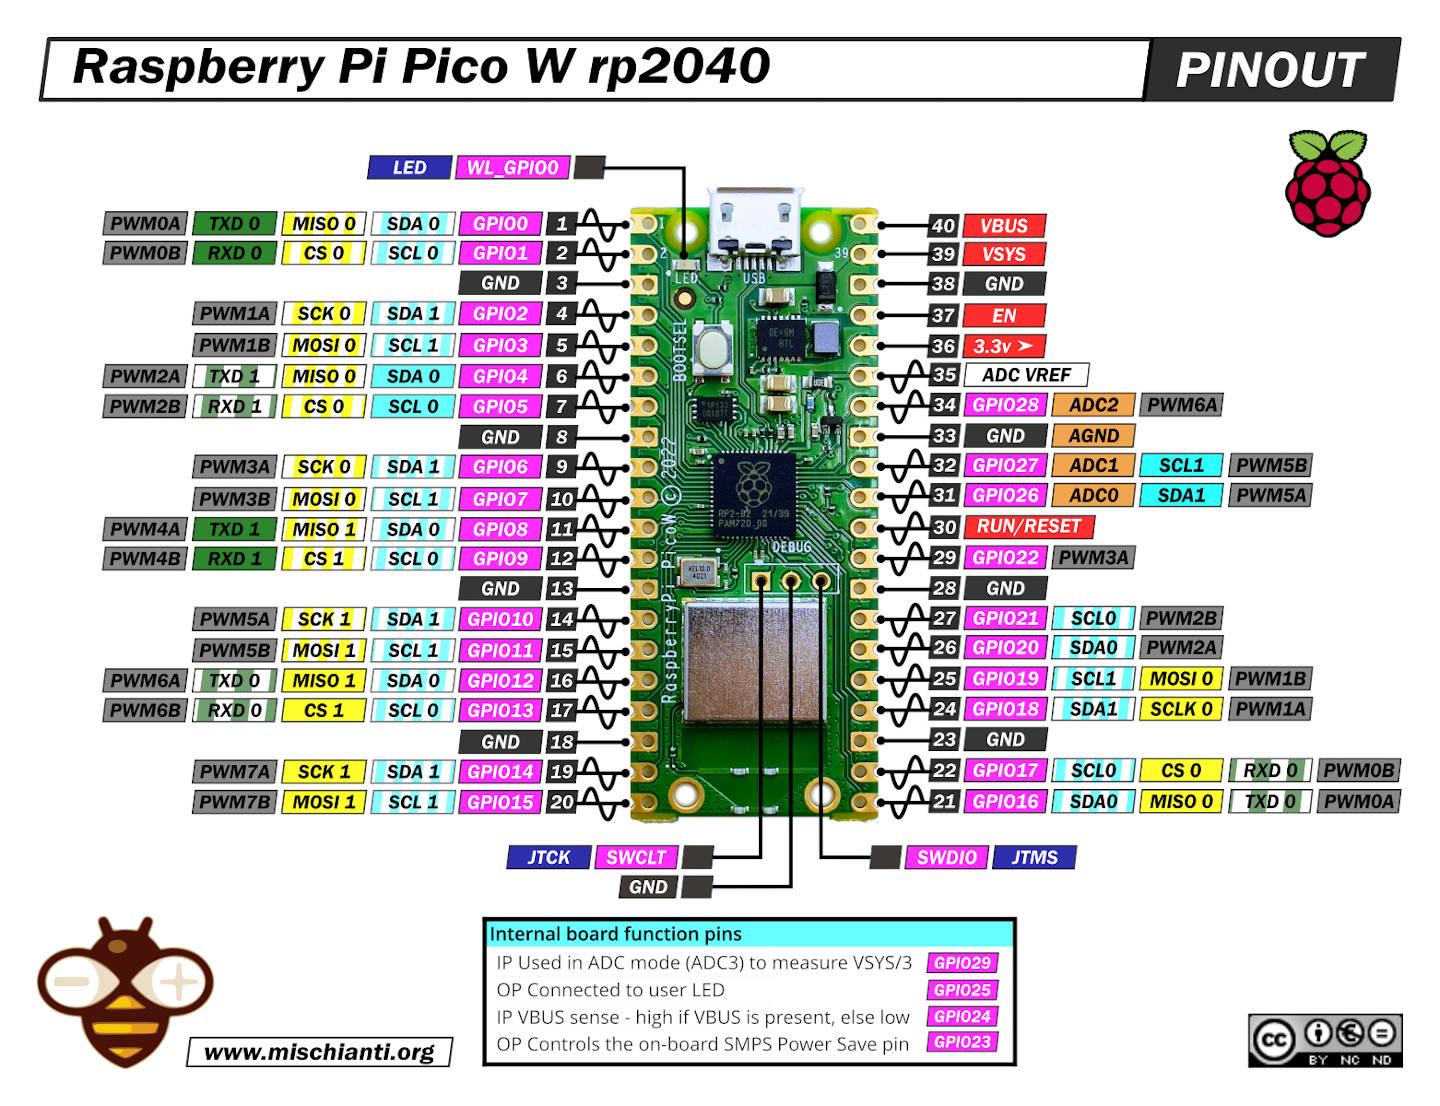 Raspberry-Pi-Pico-W-rp2040-WiFi-pinout-mischianti.jpg